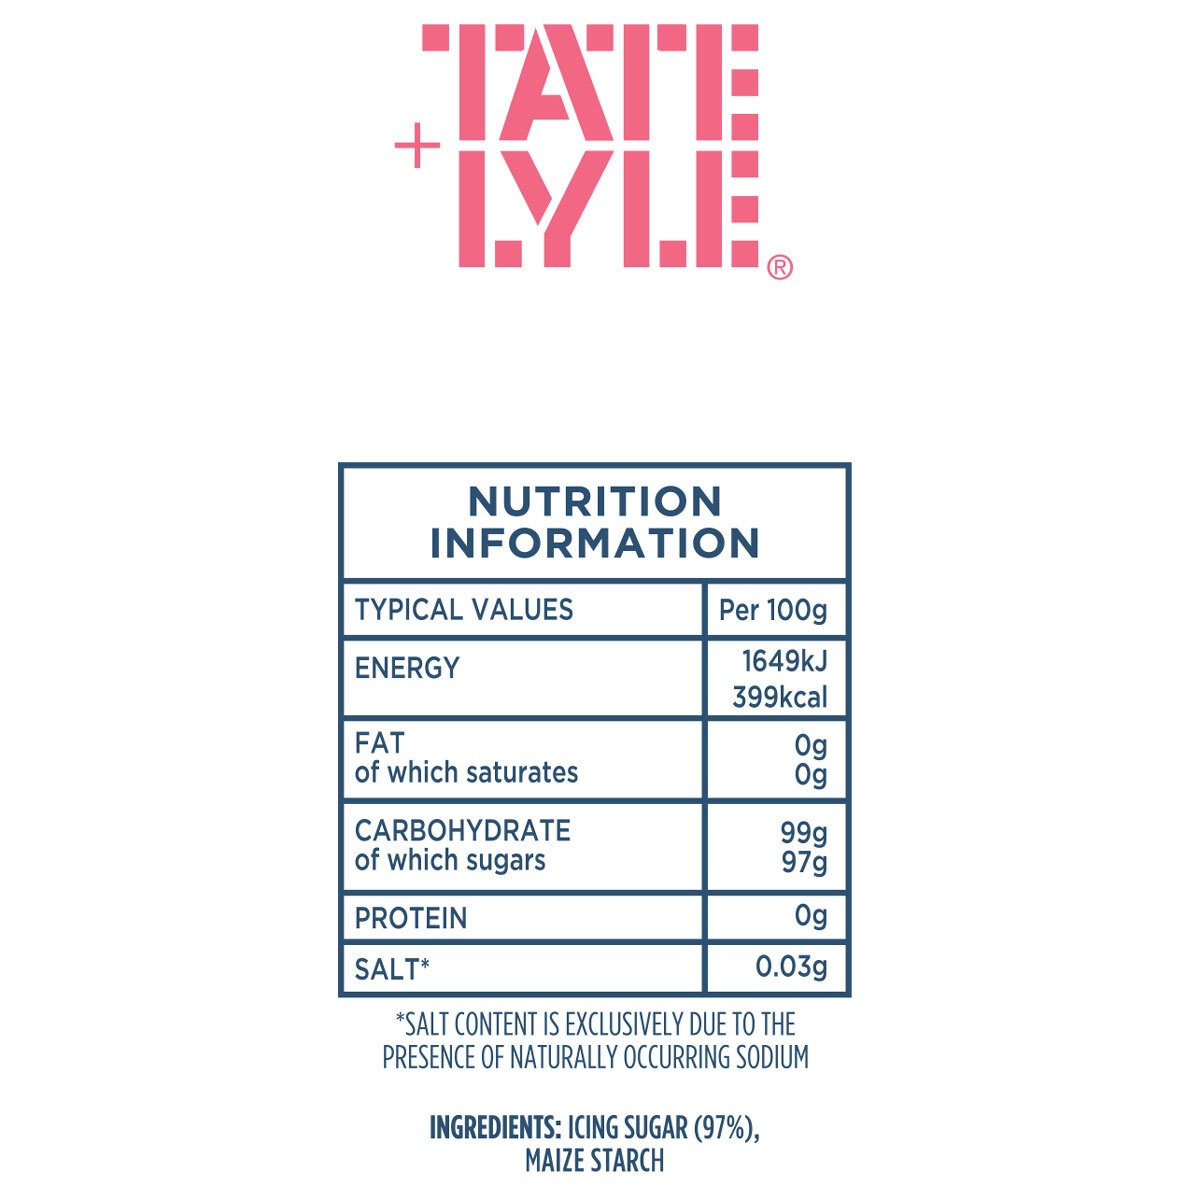 Tate & Lyle Fairtrade Icing Sugar, 3kg